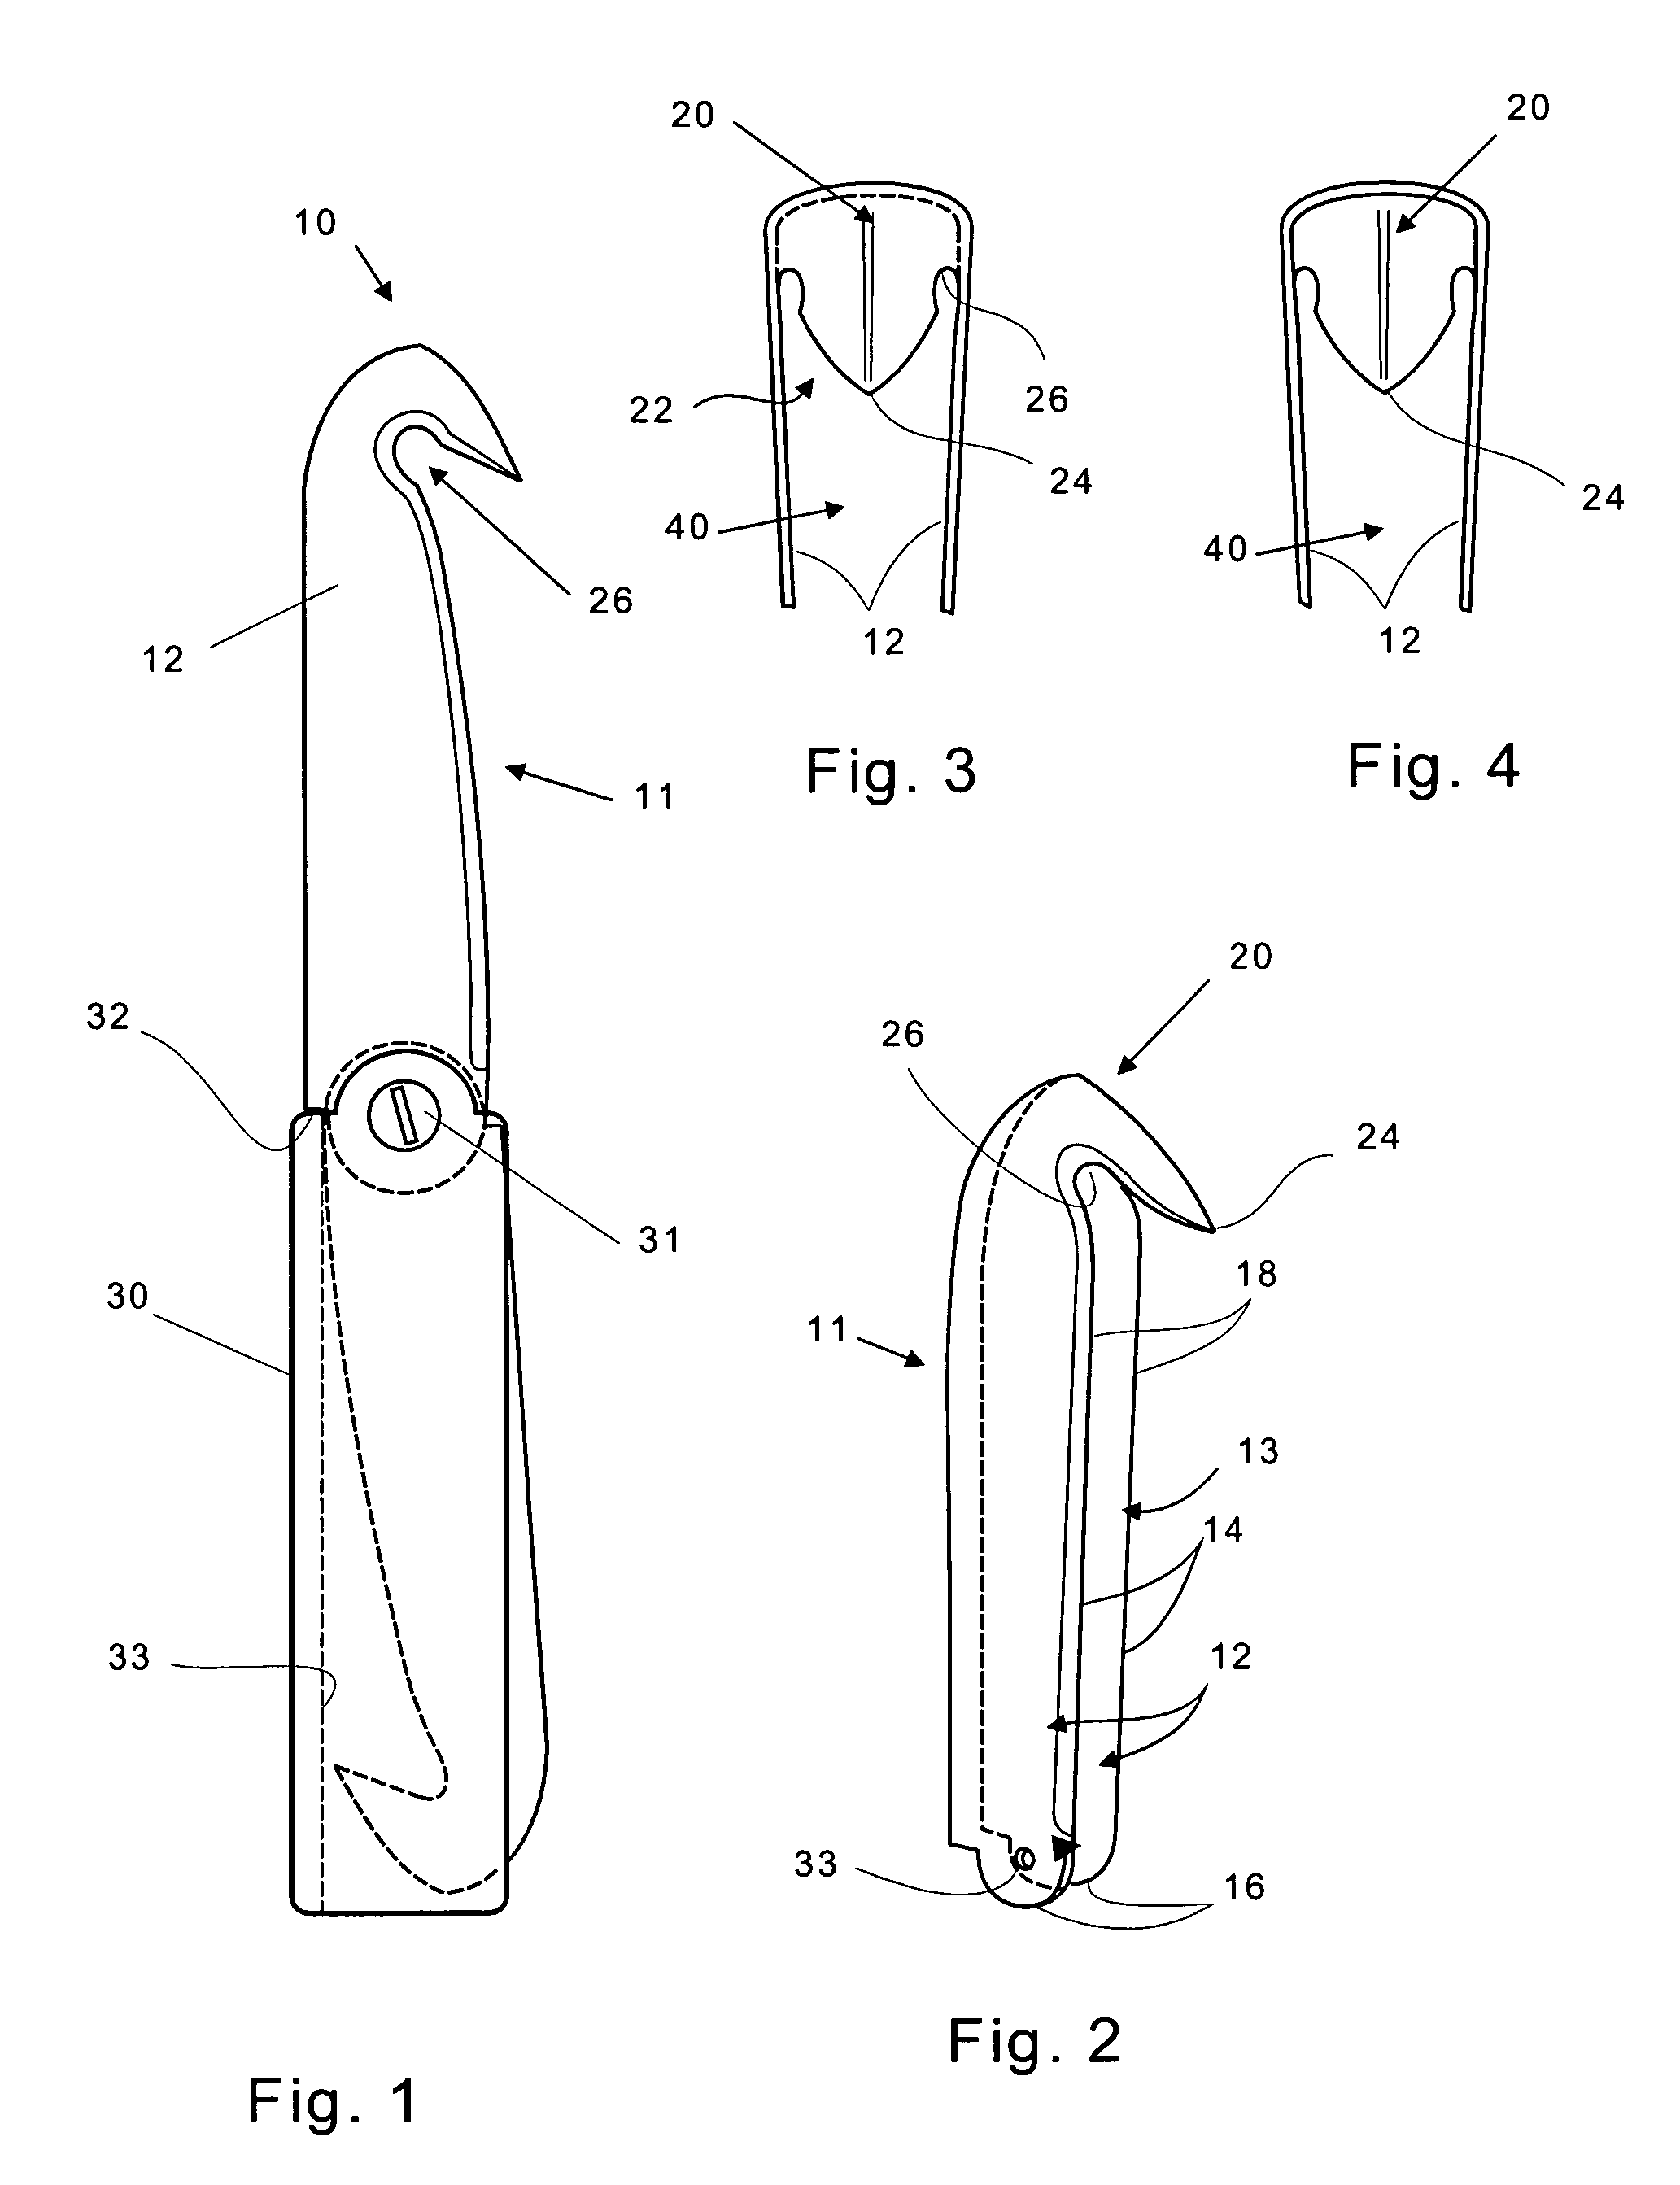 Deboning knife